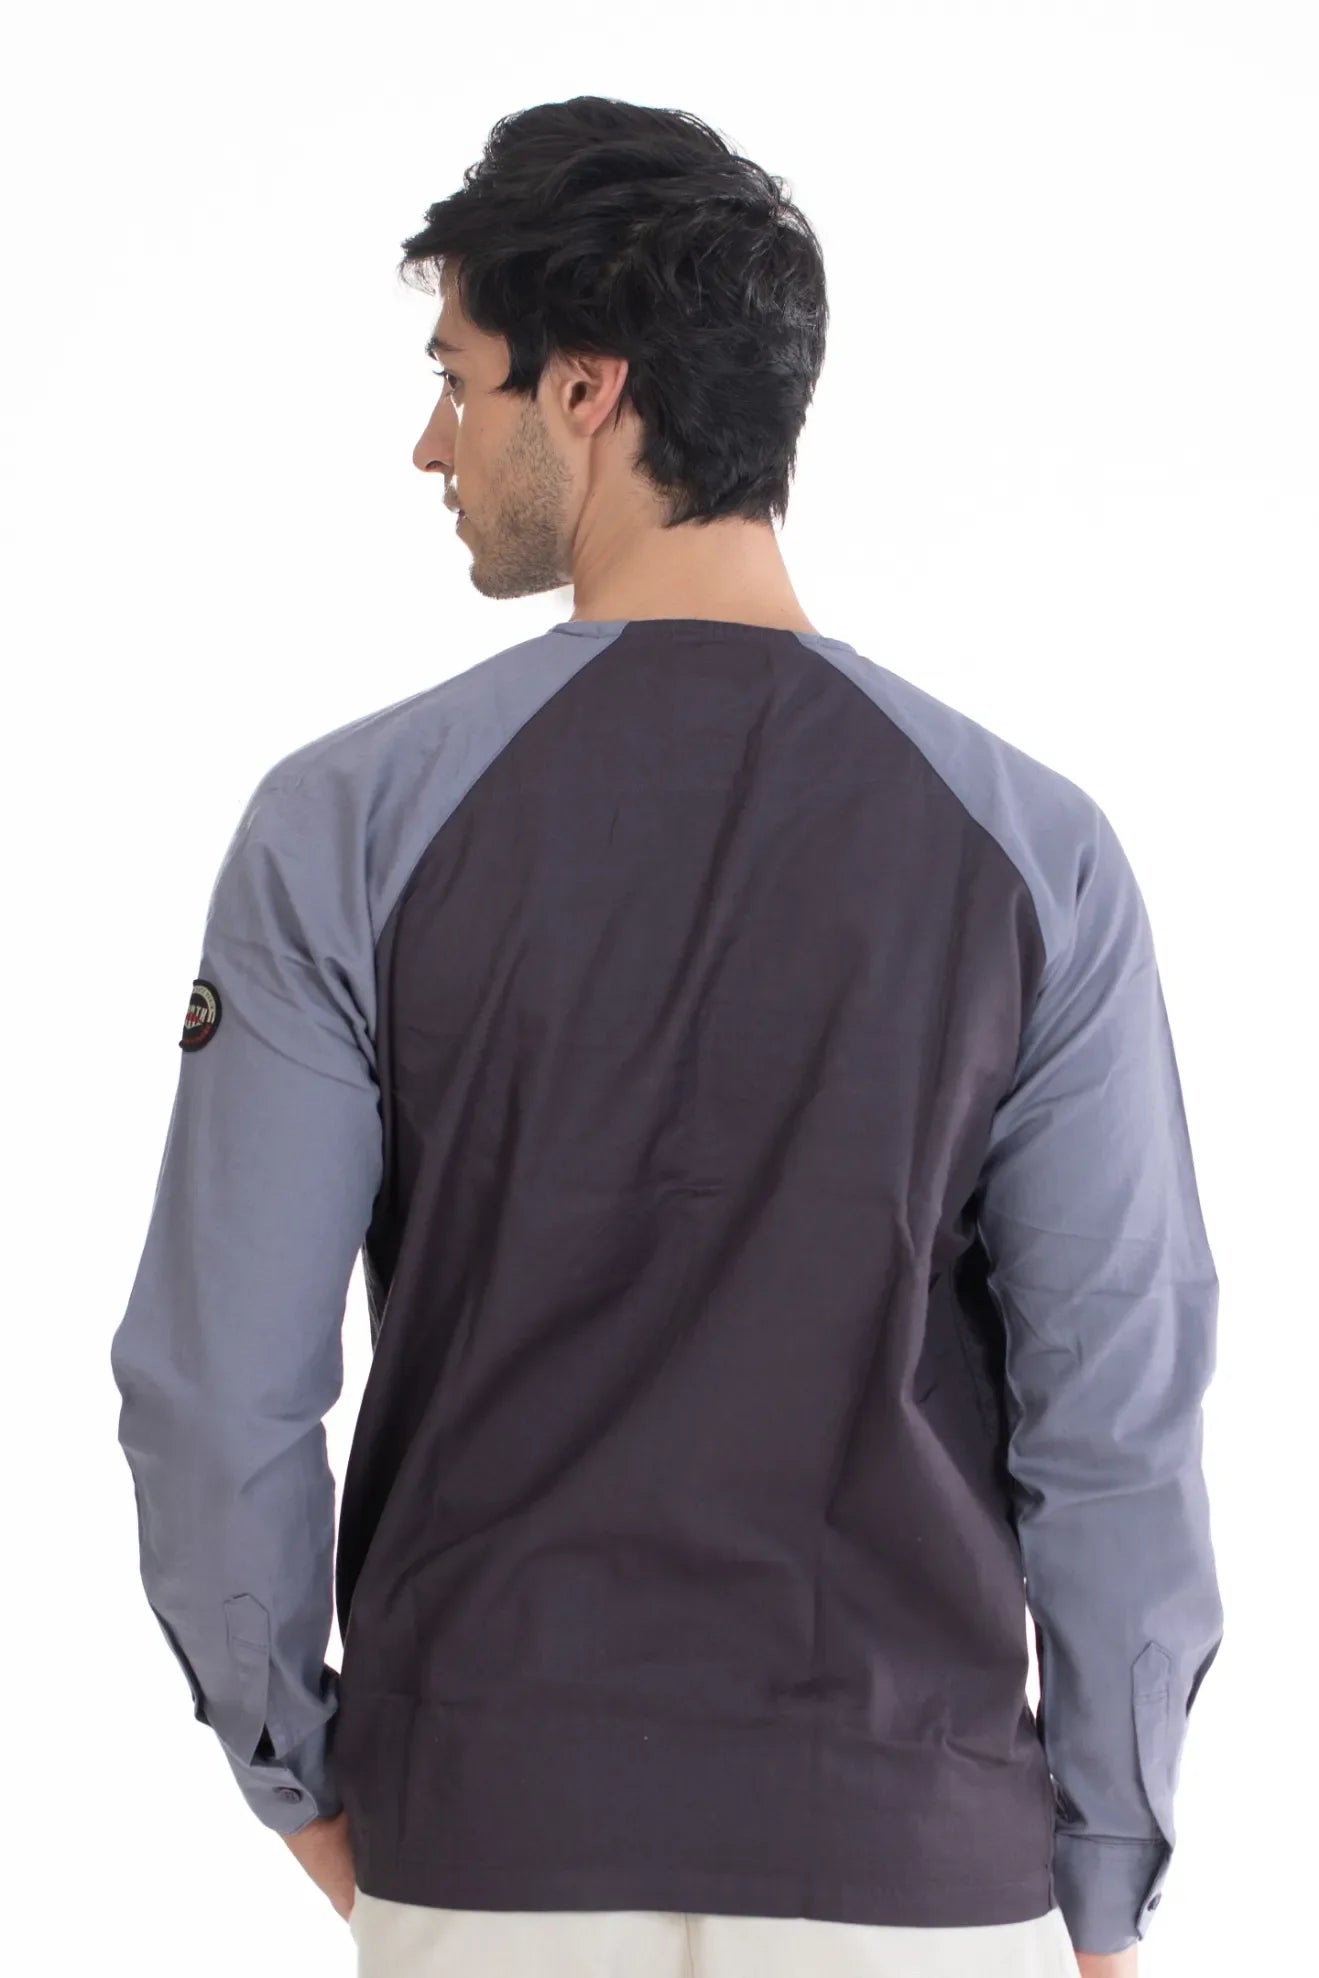 Dark Grey Raglan Full Sleeve Men's Plain Shirt